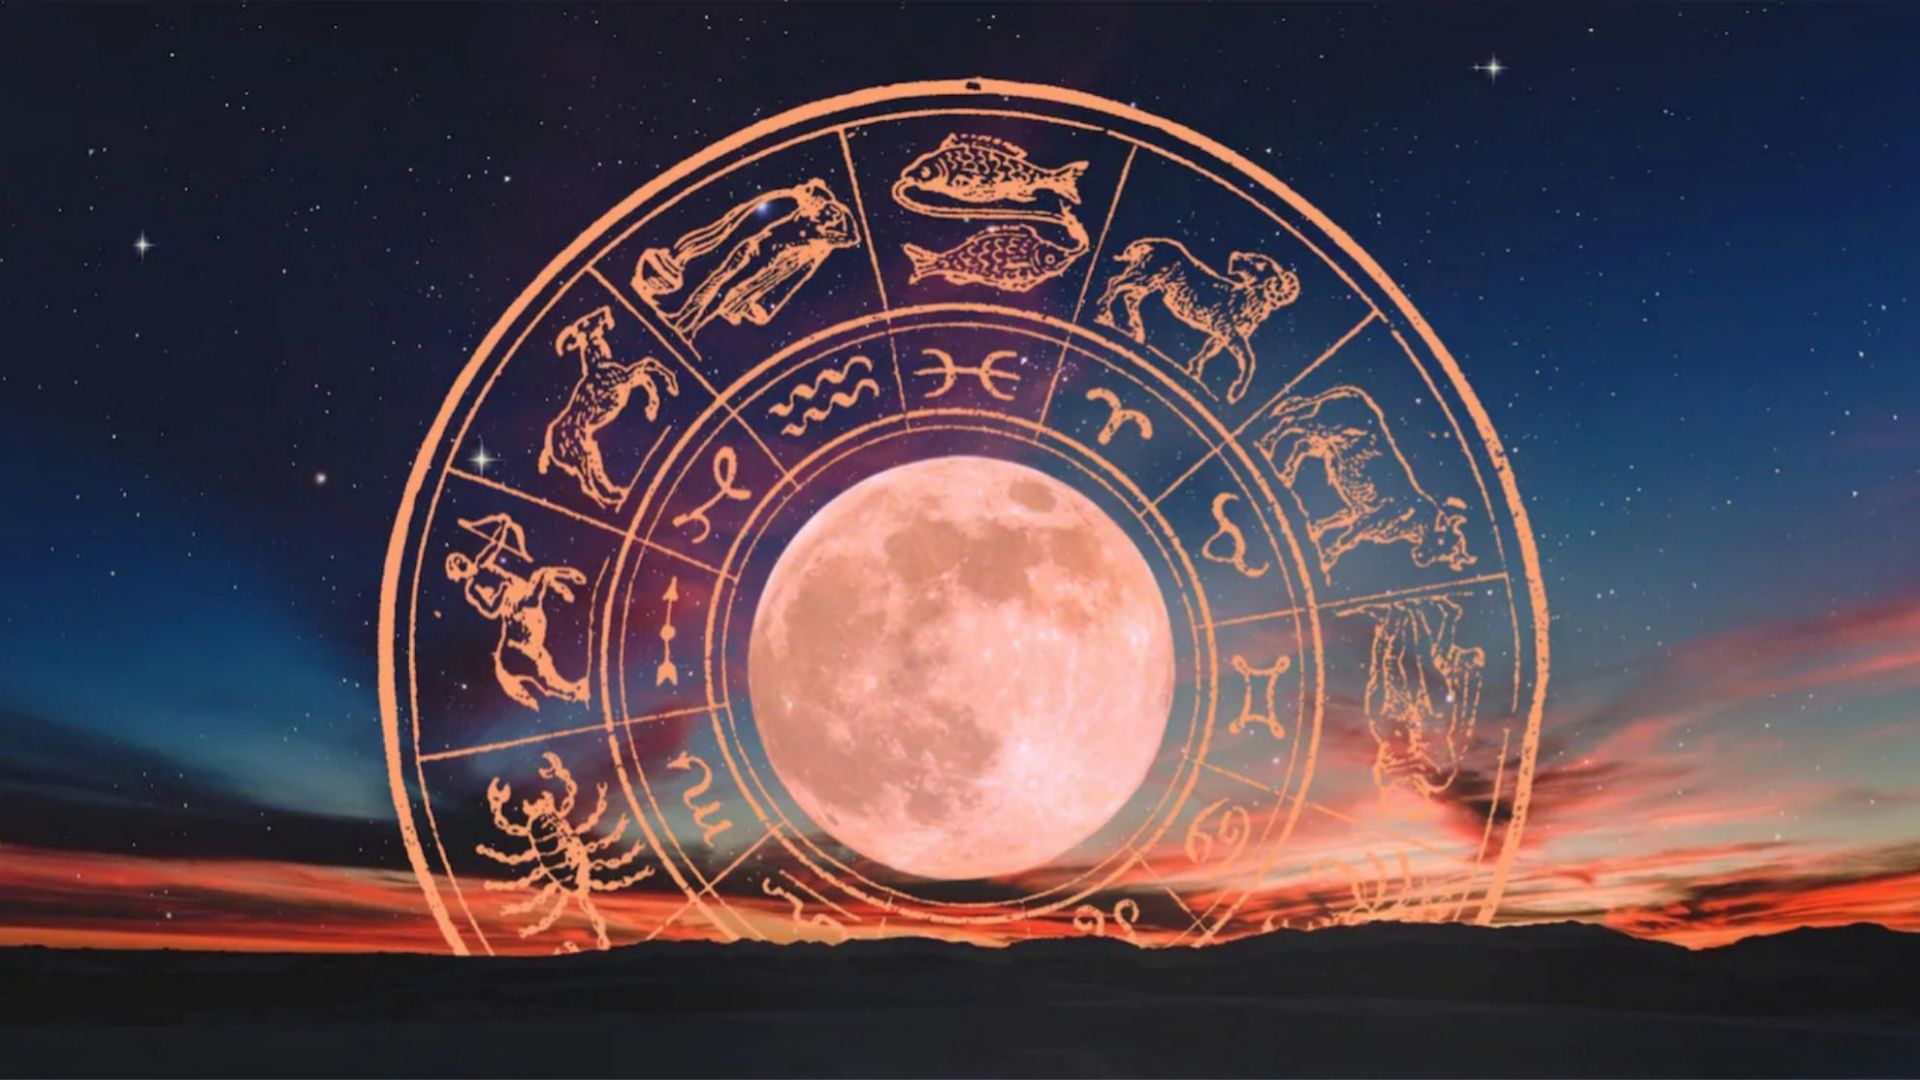 Zodiac Sign And Symbols Around The Sun